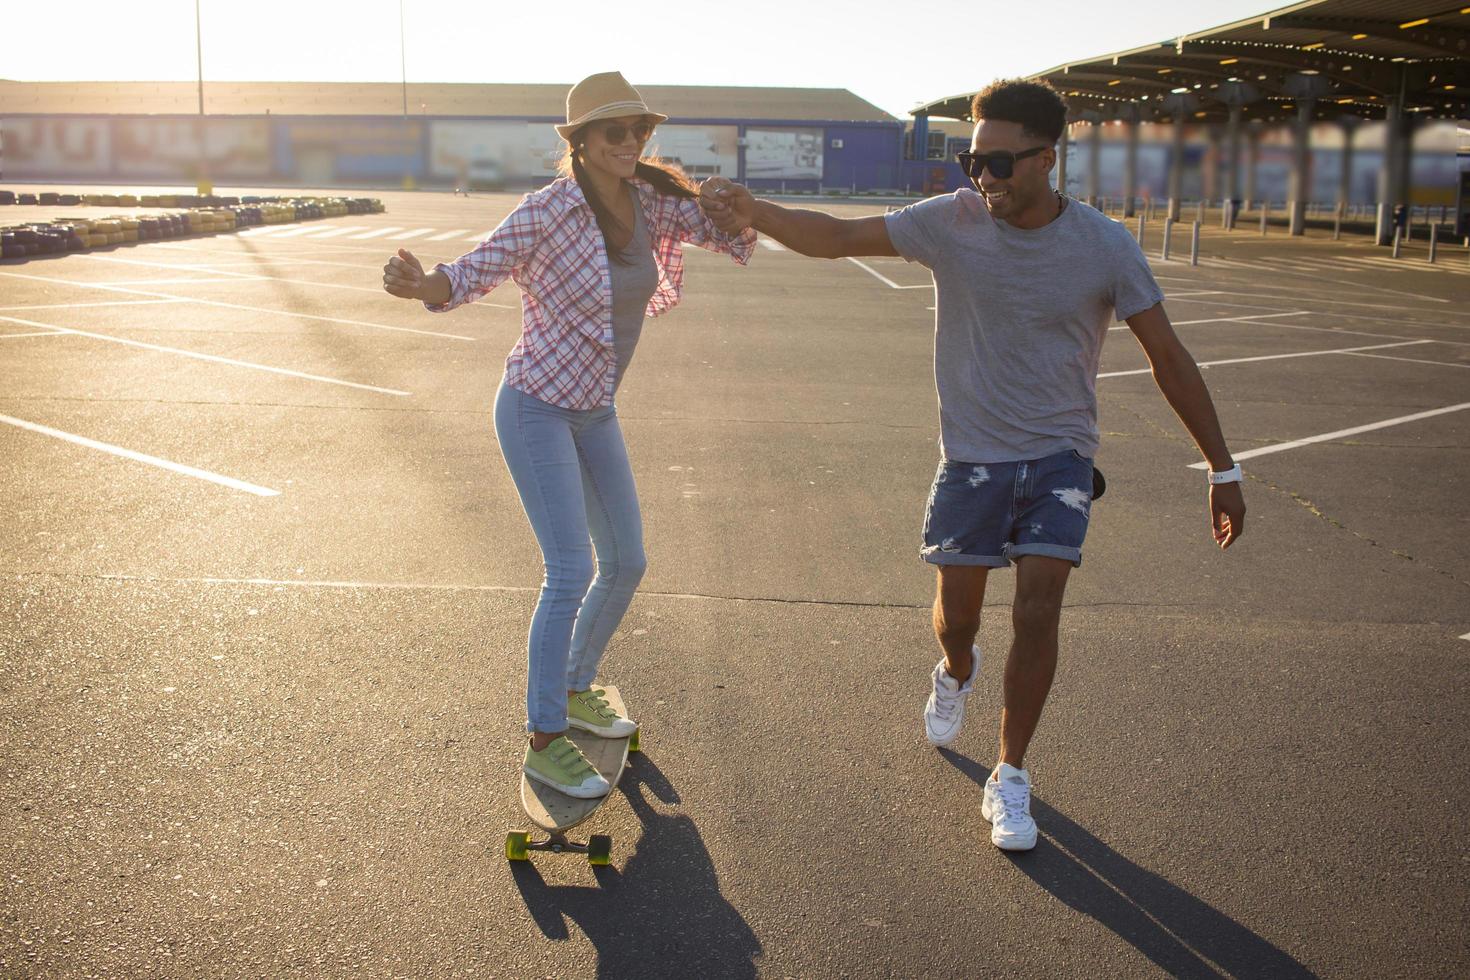 gelukkig jong stel skateboard rijden tijdens zonsopgang foto